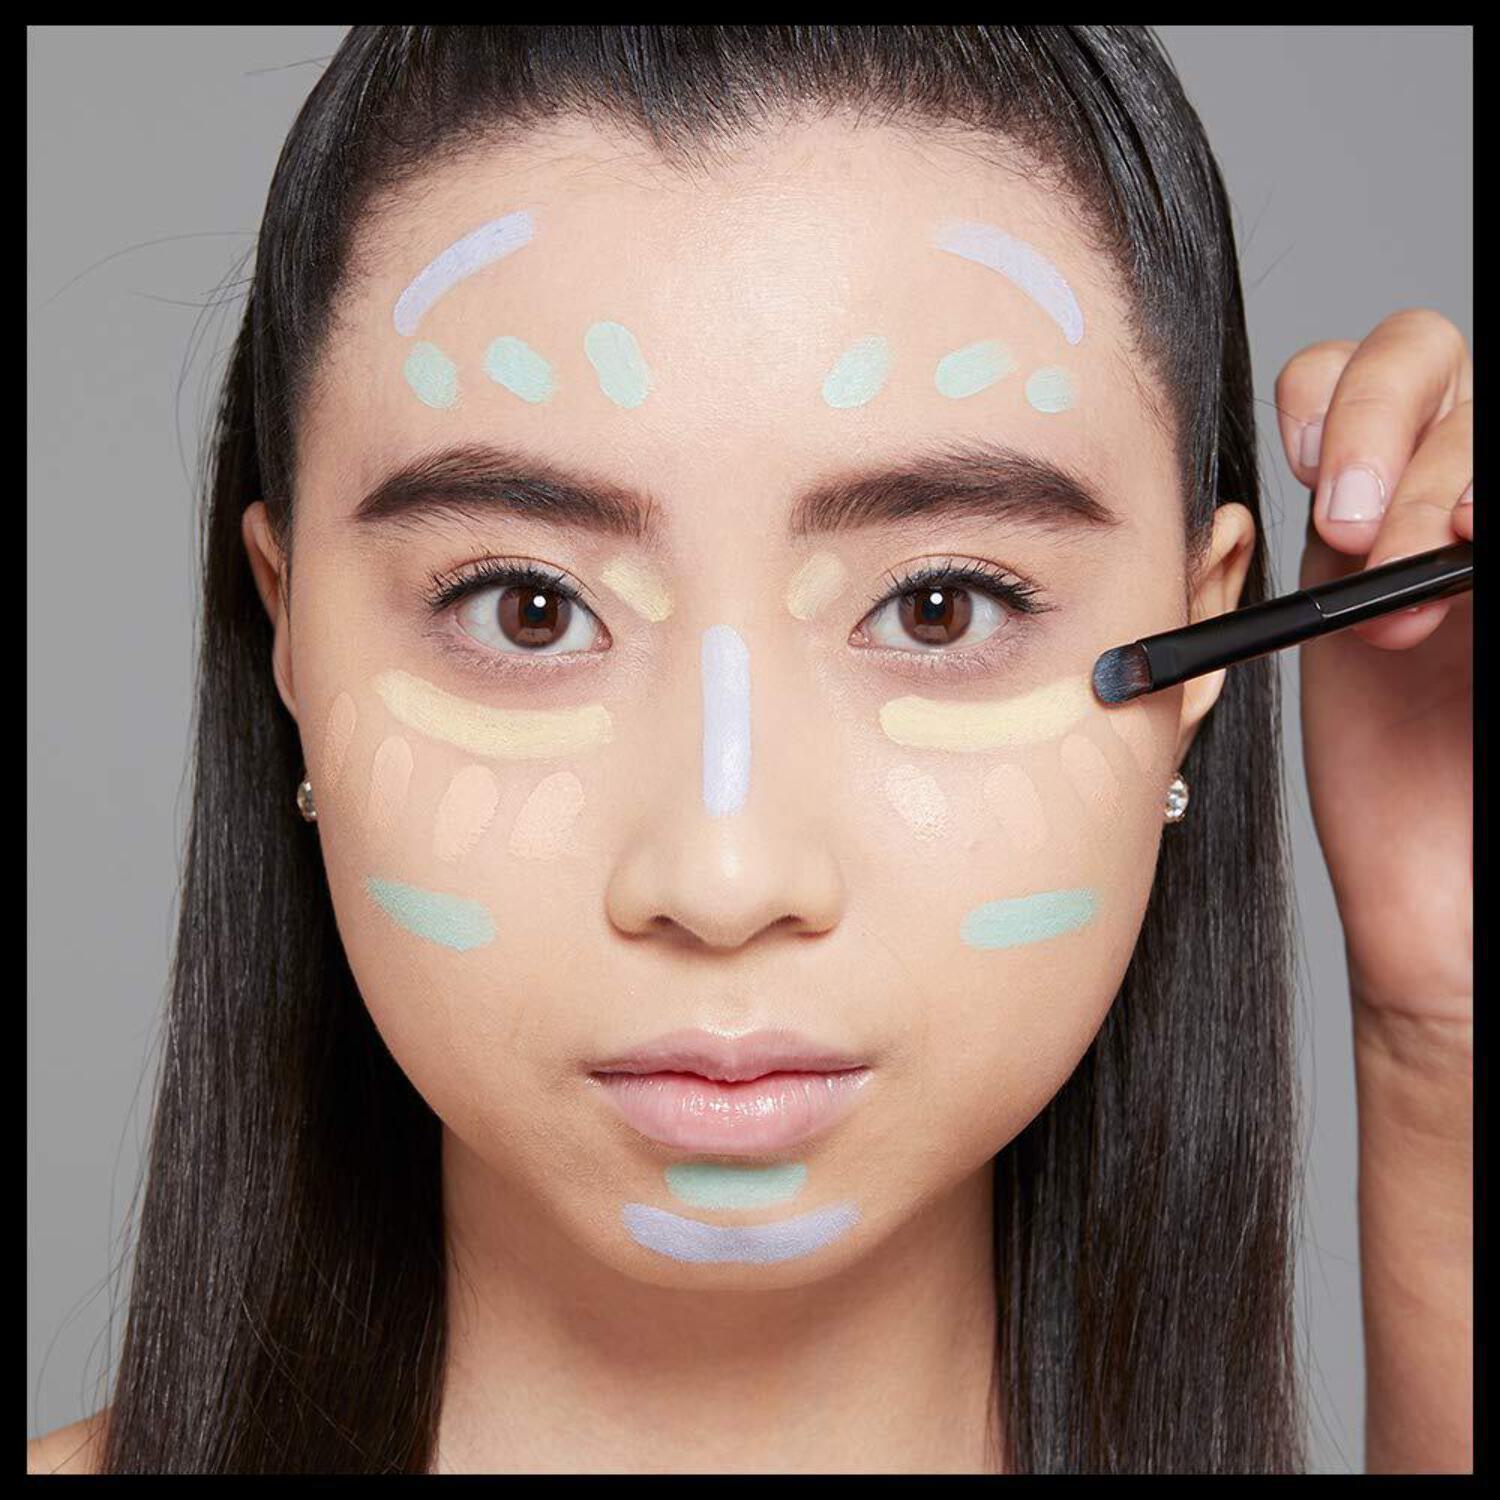 NYX Professional Makeup Conceal, Correct, Contour Palette, Light - image 4 of 8